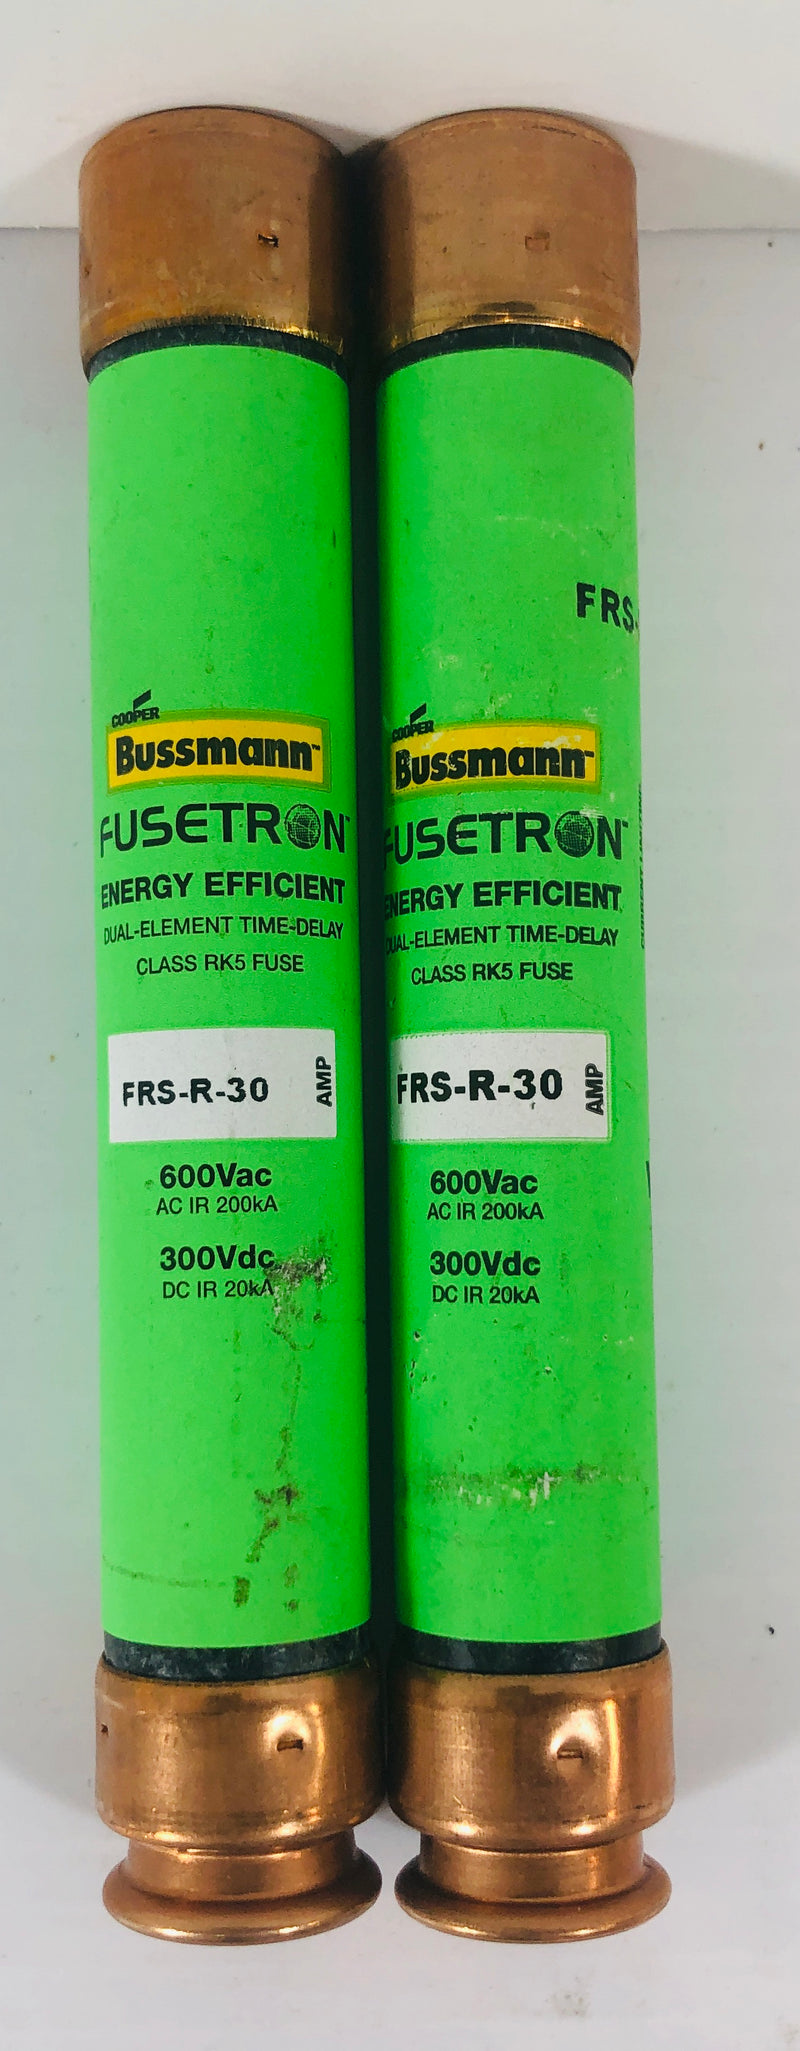 Bussman Fusetron Energy Effecient Fuse FRS-R-80 (Lot of 3)